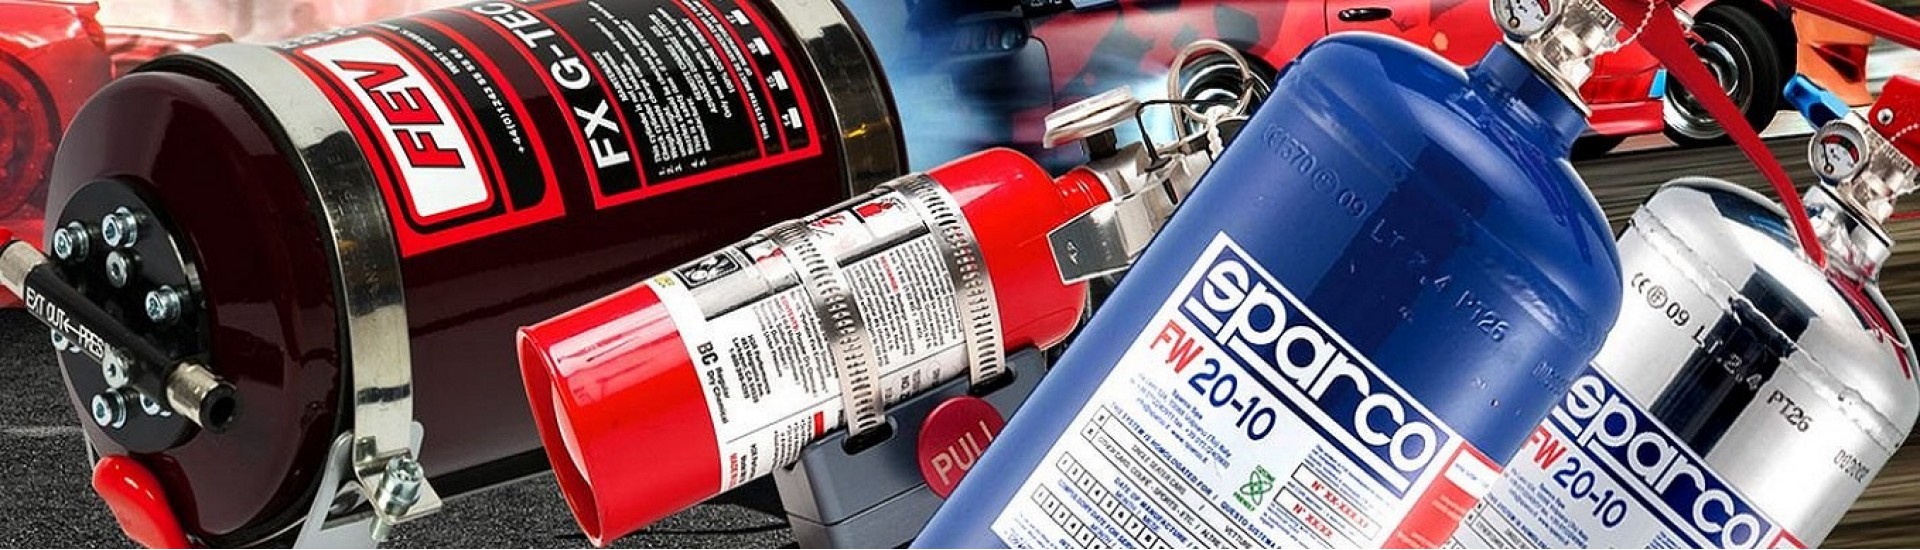 کپسول آتش نشانی خودرو هوندا سیویک EXS 